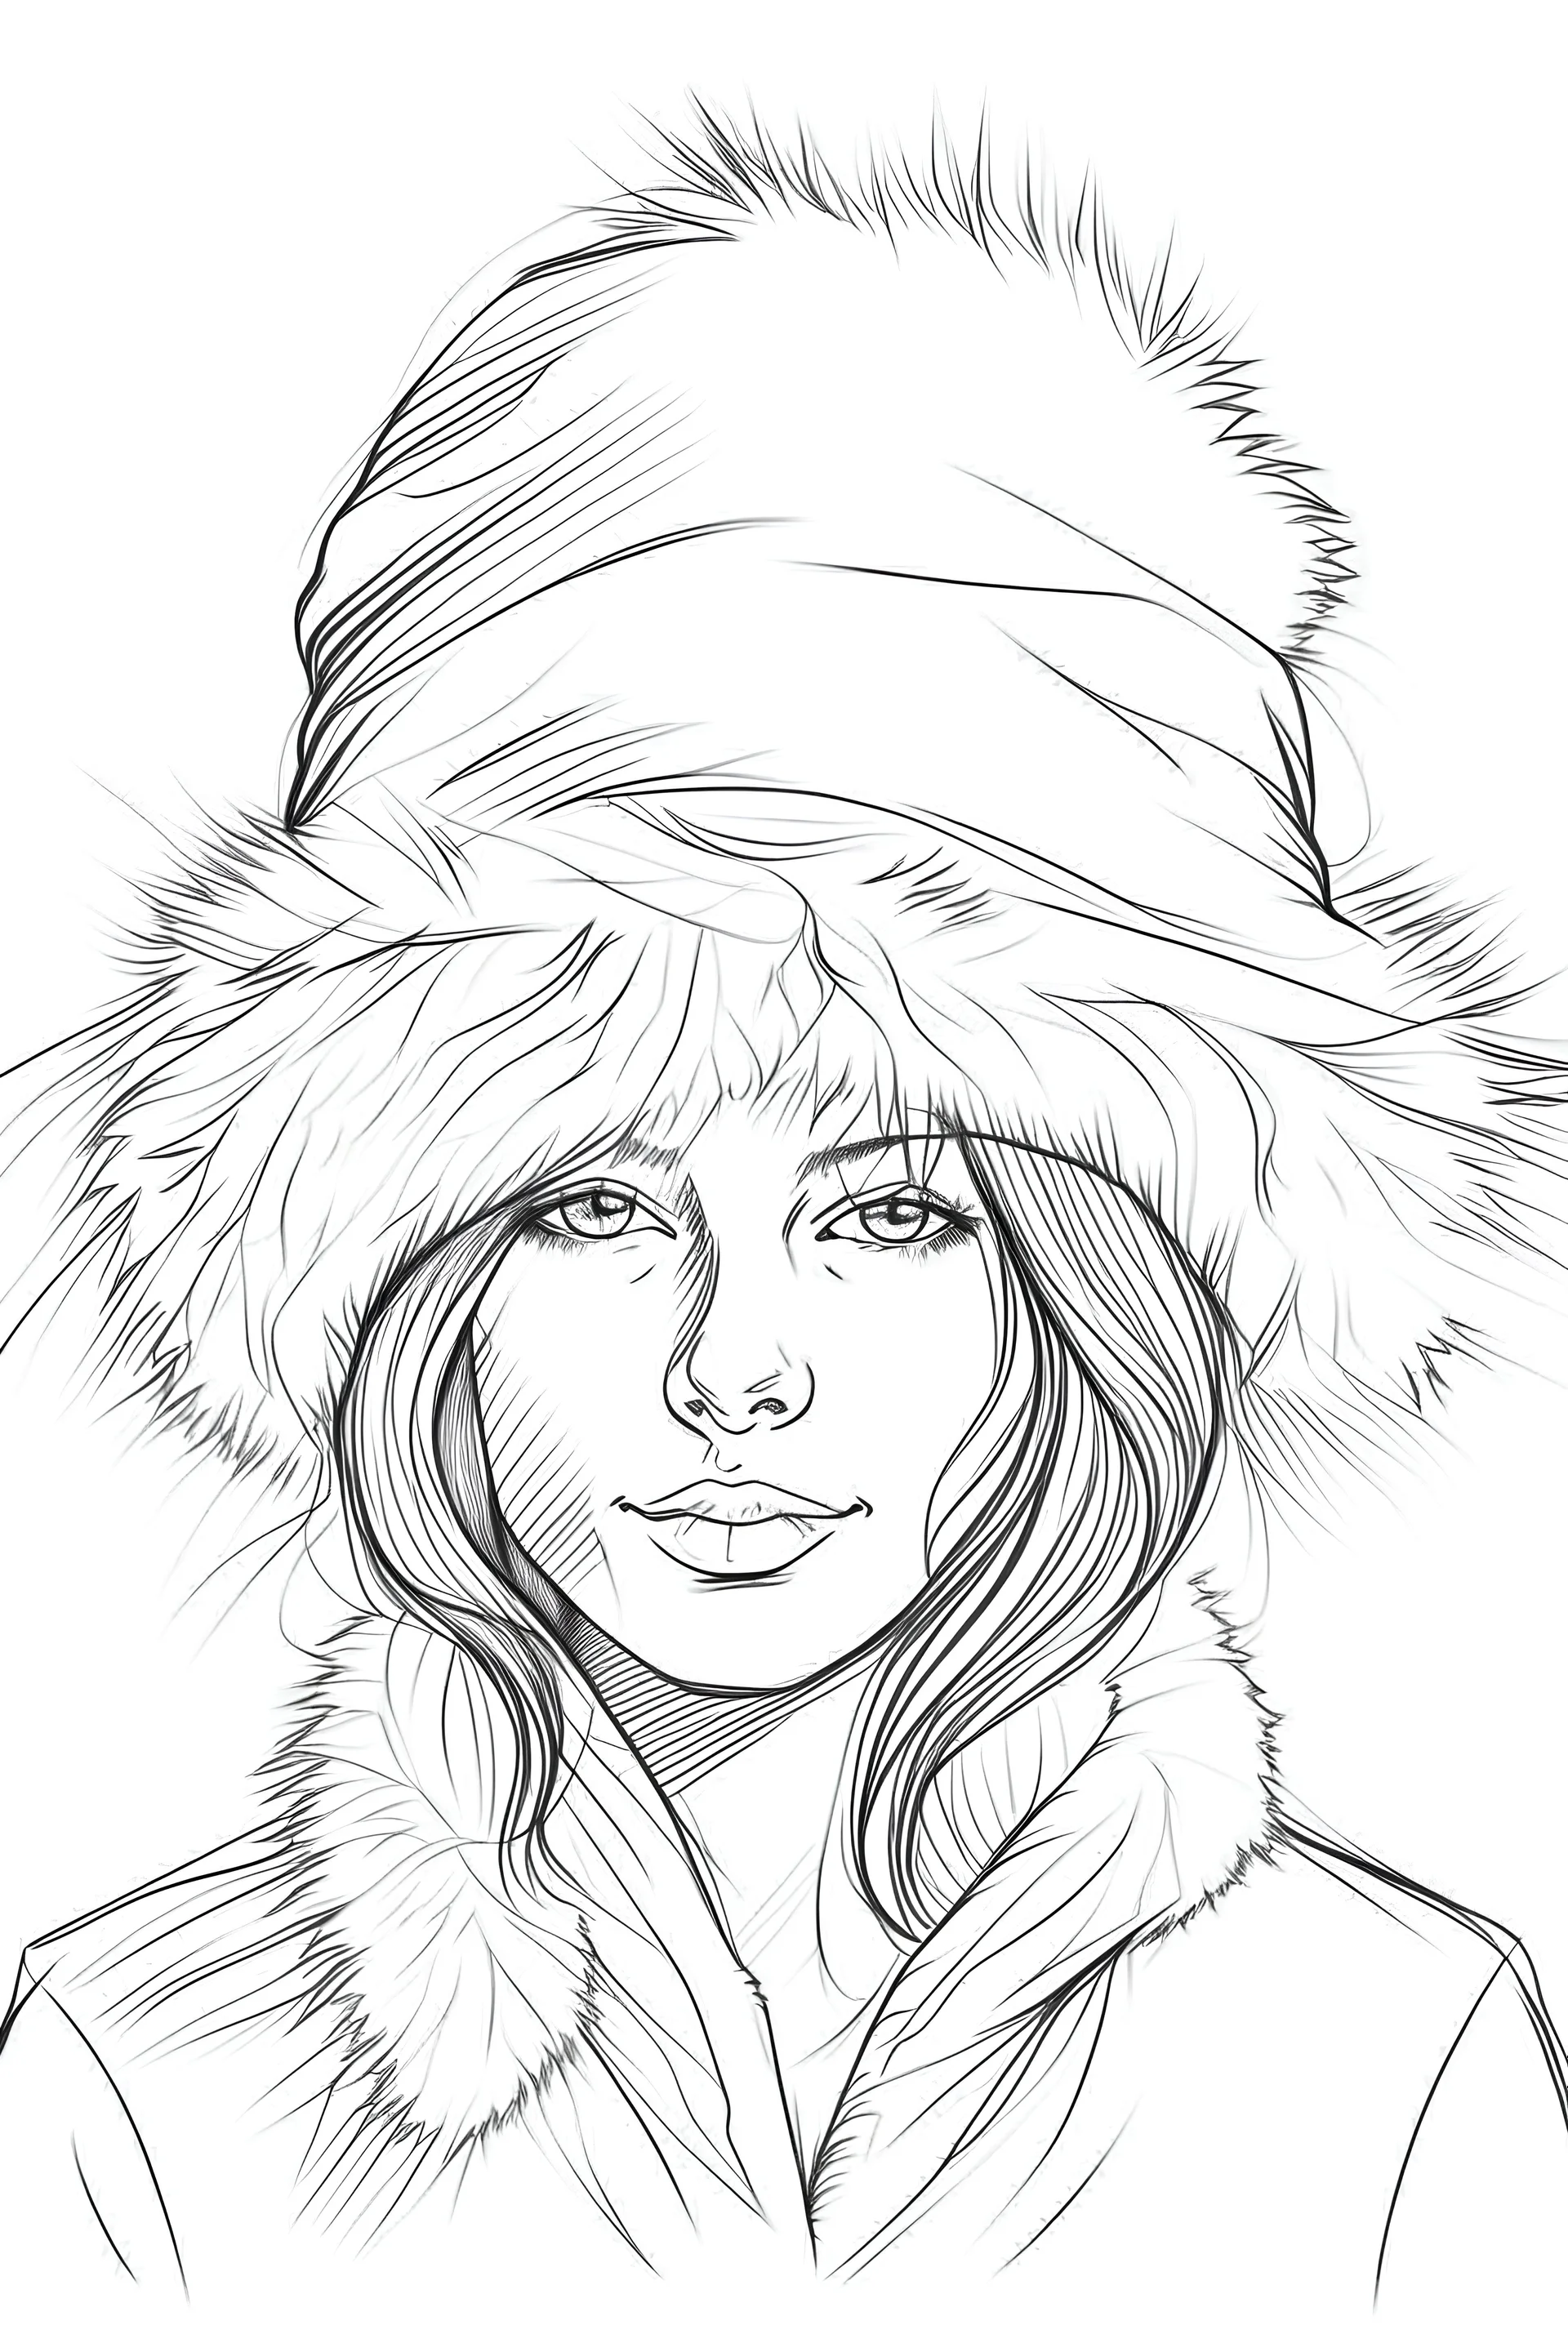 fur hat draw in one line art